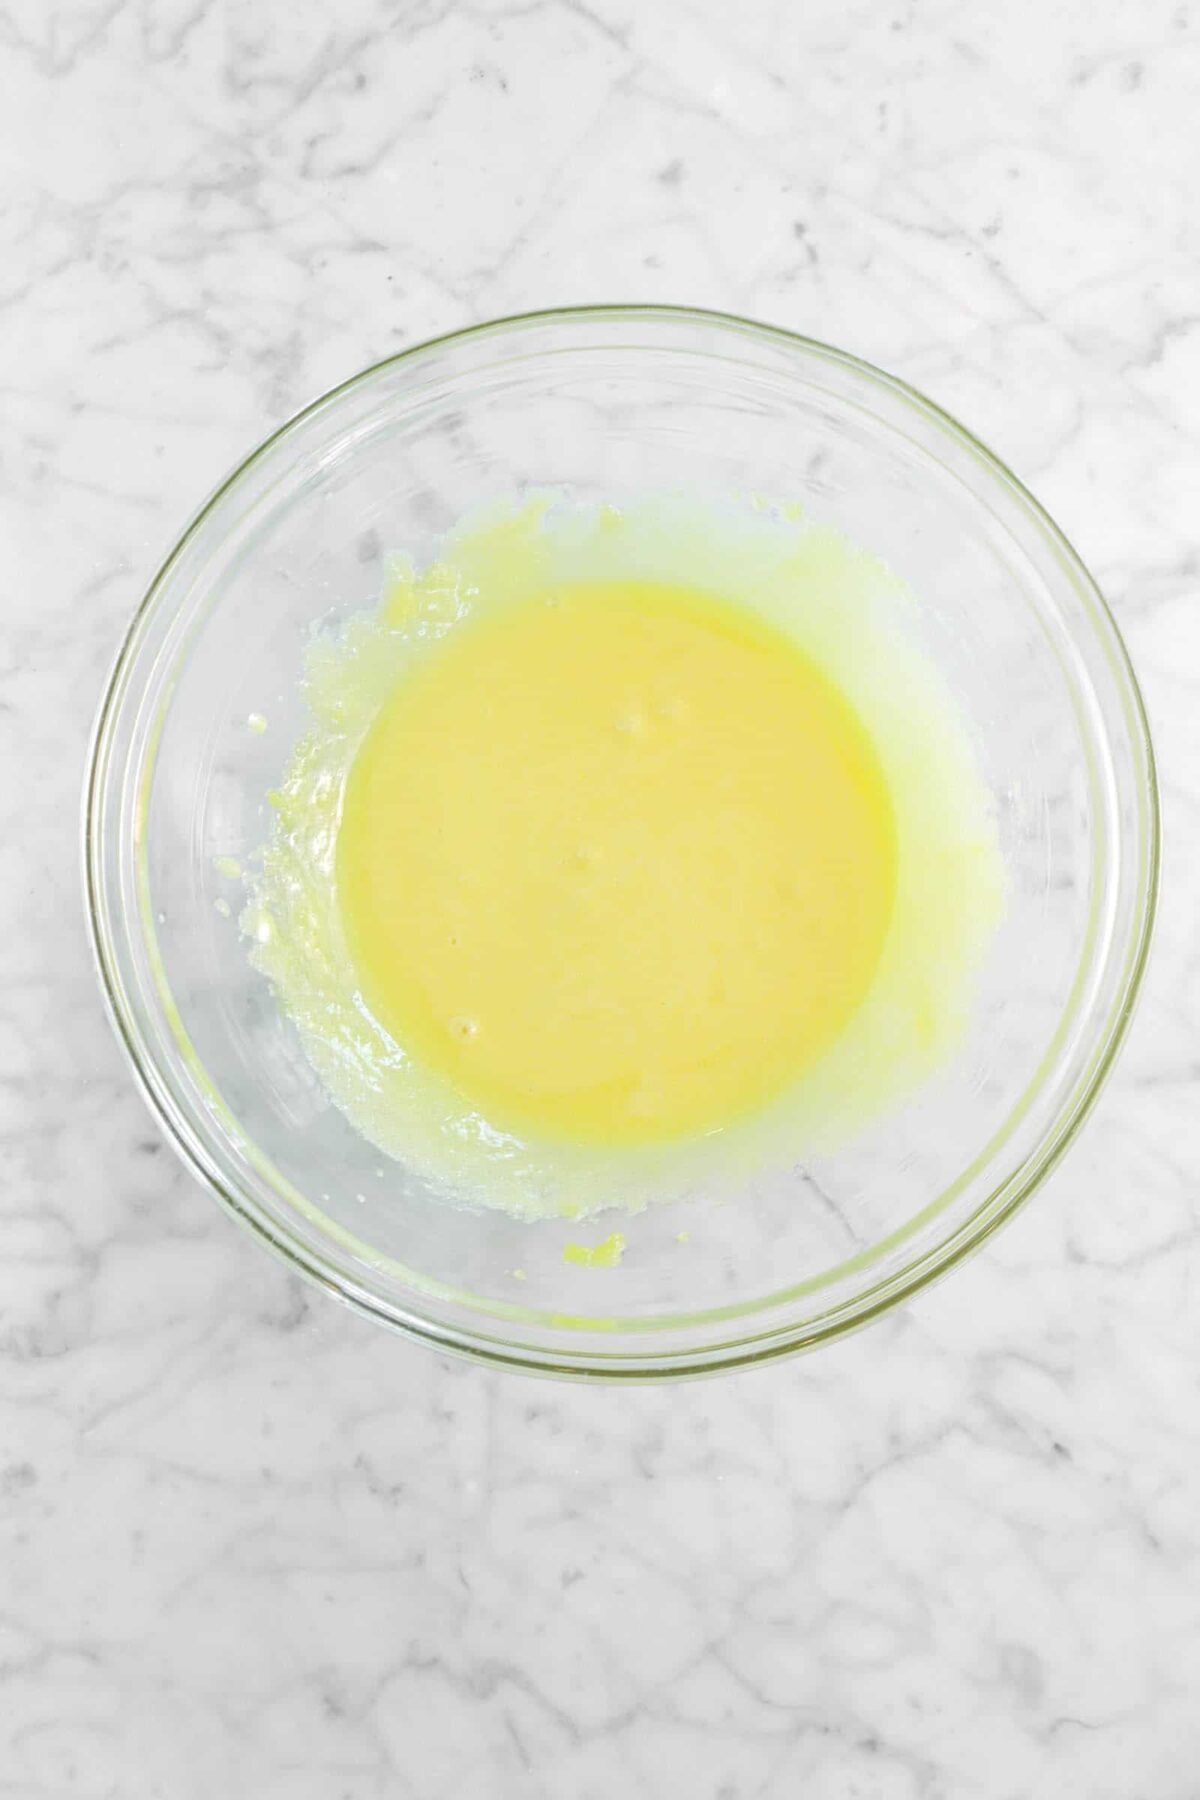 egg yolks and sugar mixed toether